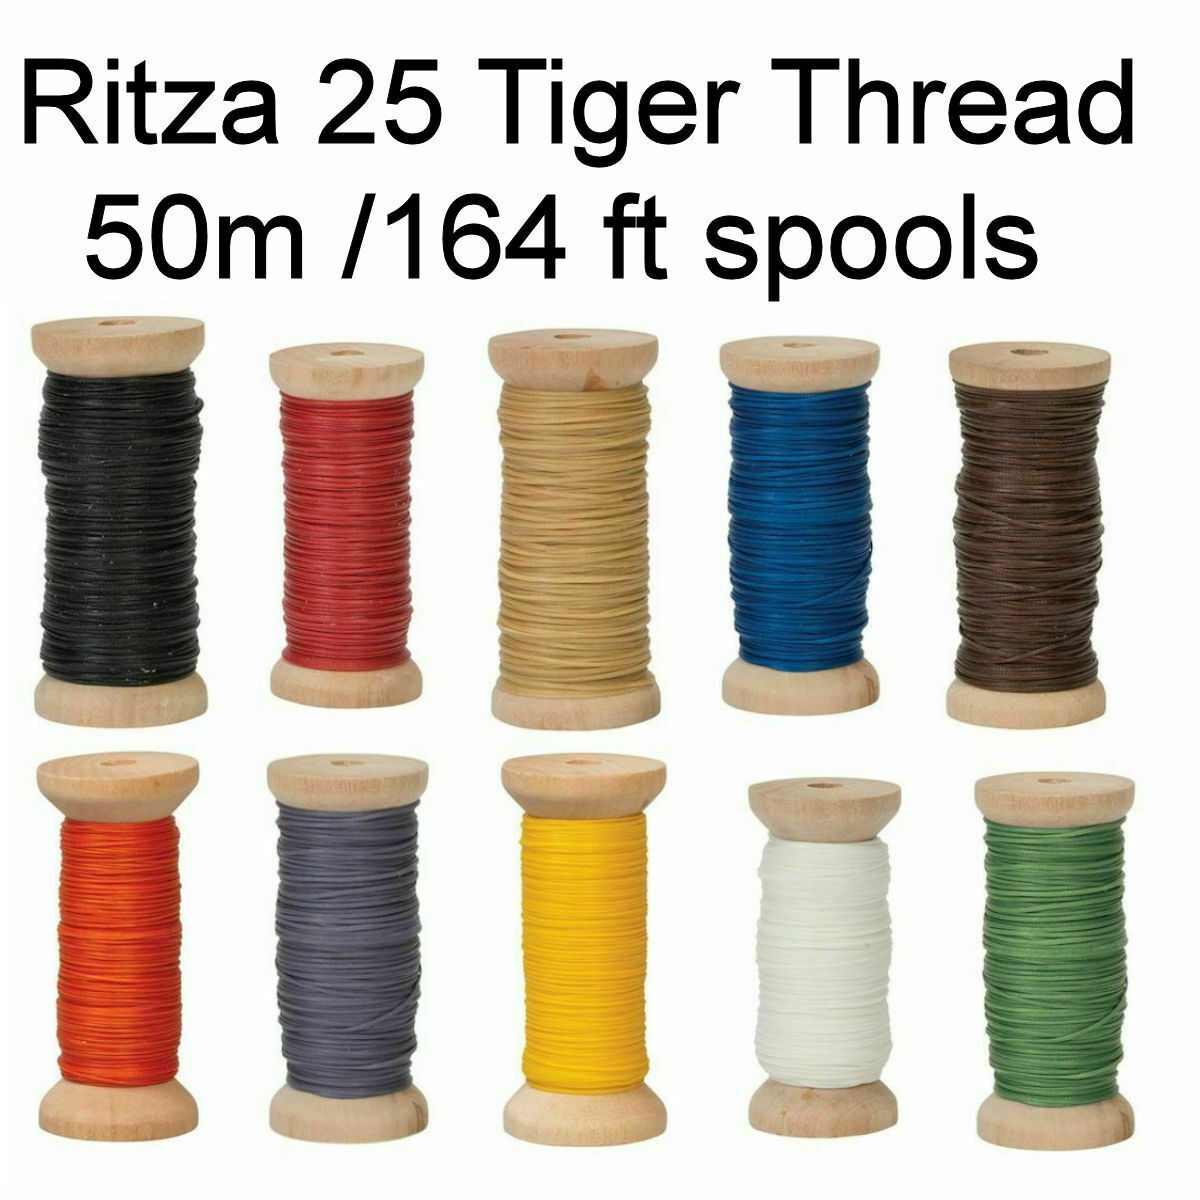 Us Seller Ritza Tiger Thread 50m Spool** 164 Ft .8mm _.6mm_1mm_1.2mm Leather